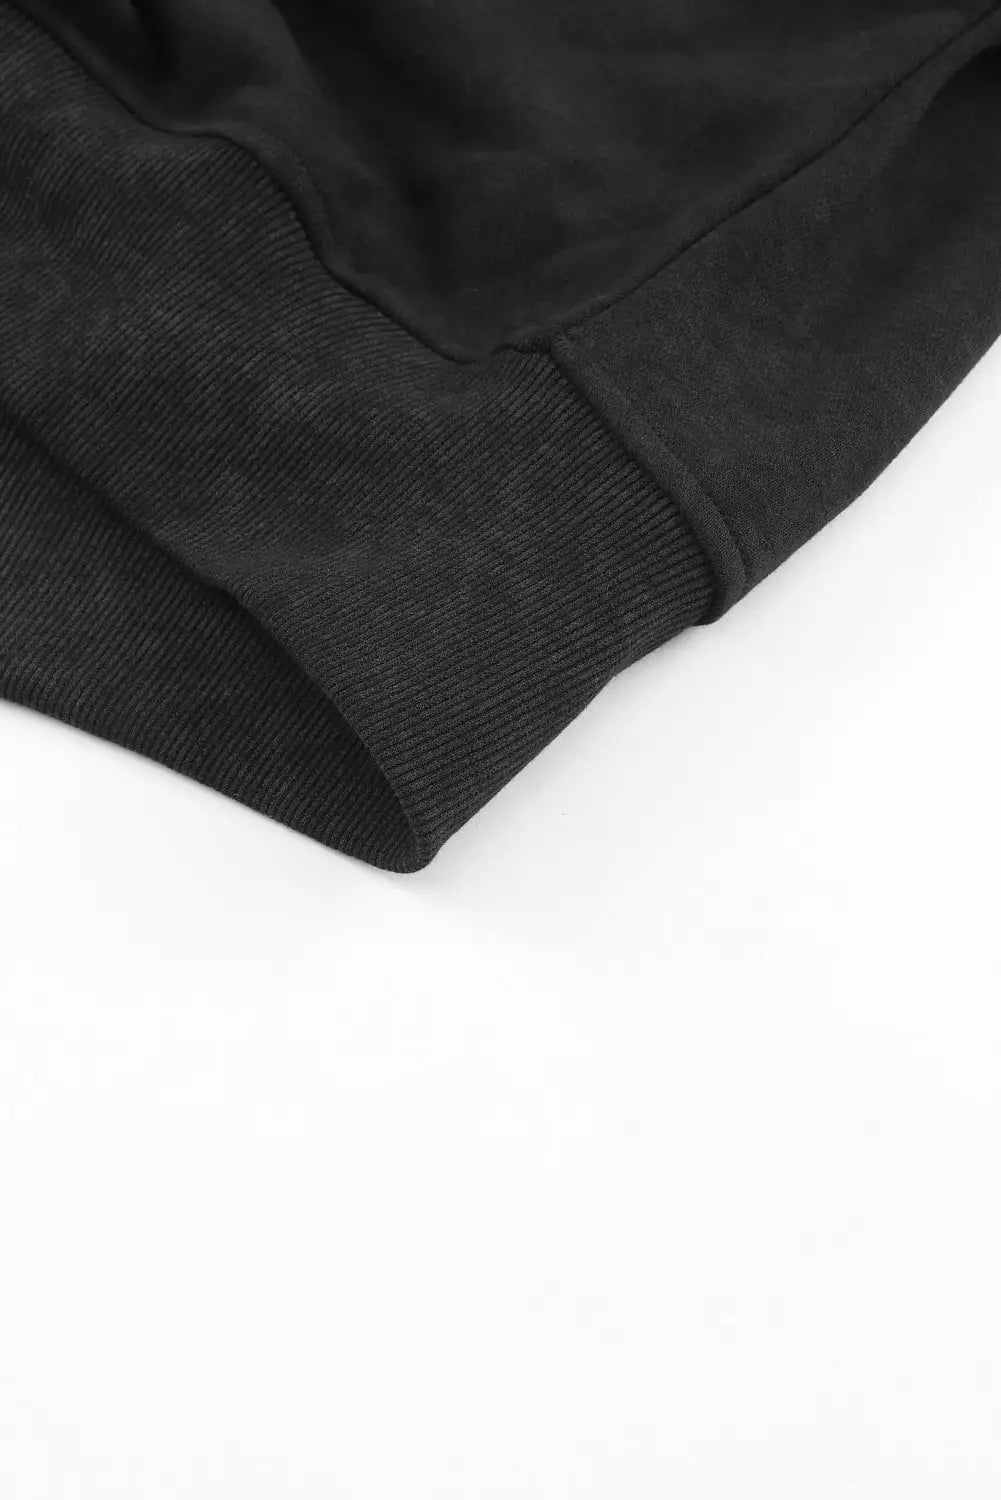 Black acid wash v - shape open back sweatshirt - tops